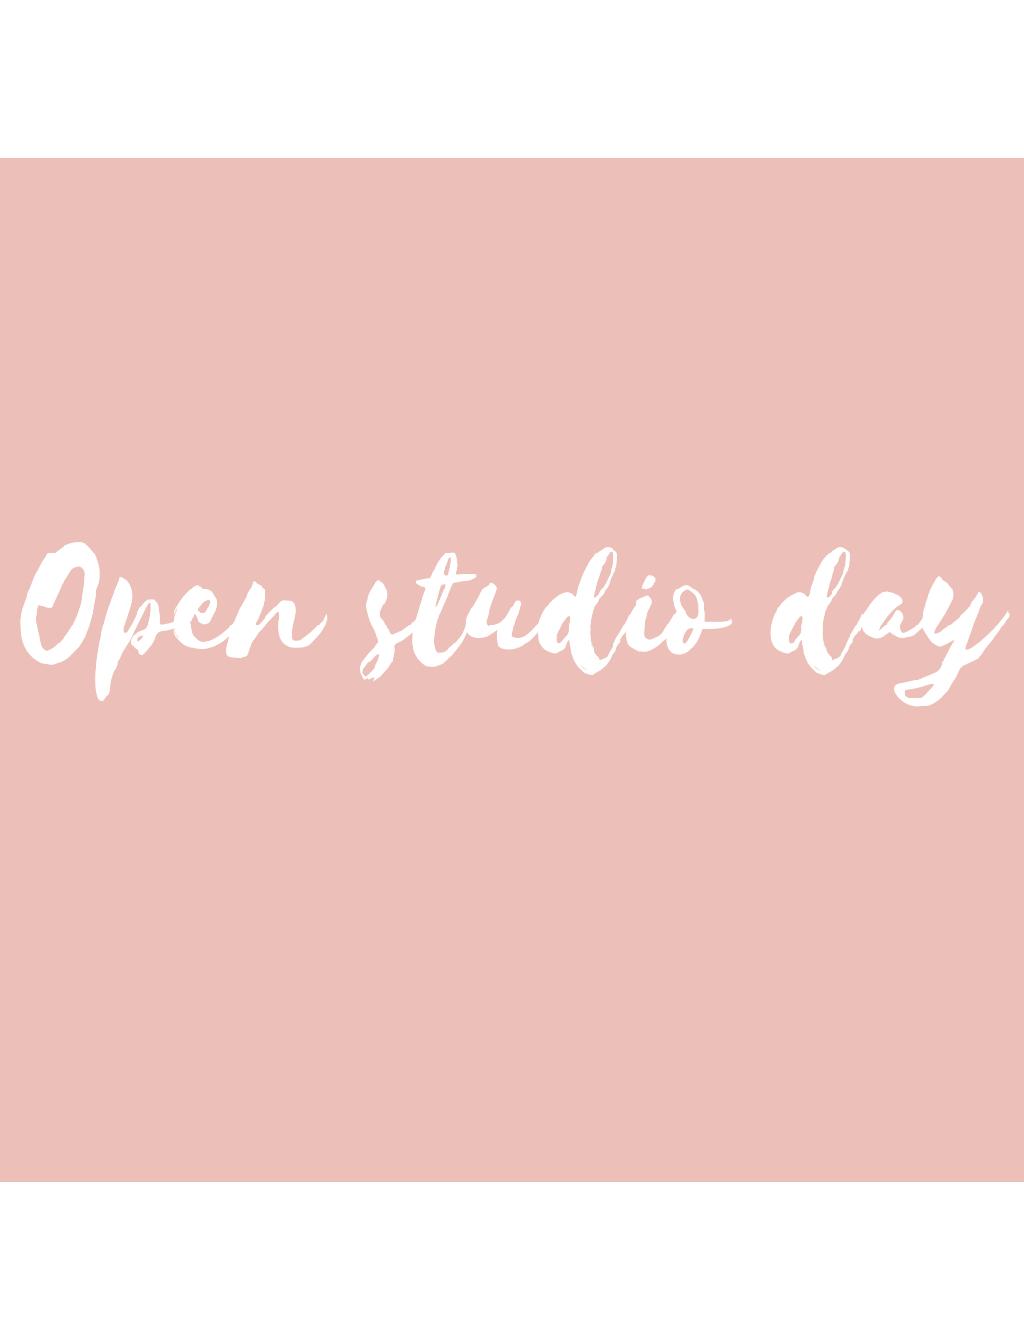 Open studio day 4:30-5:00